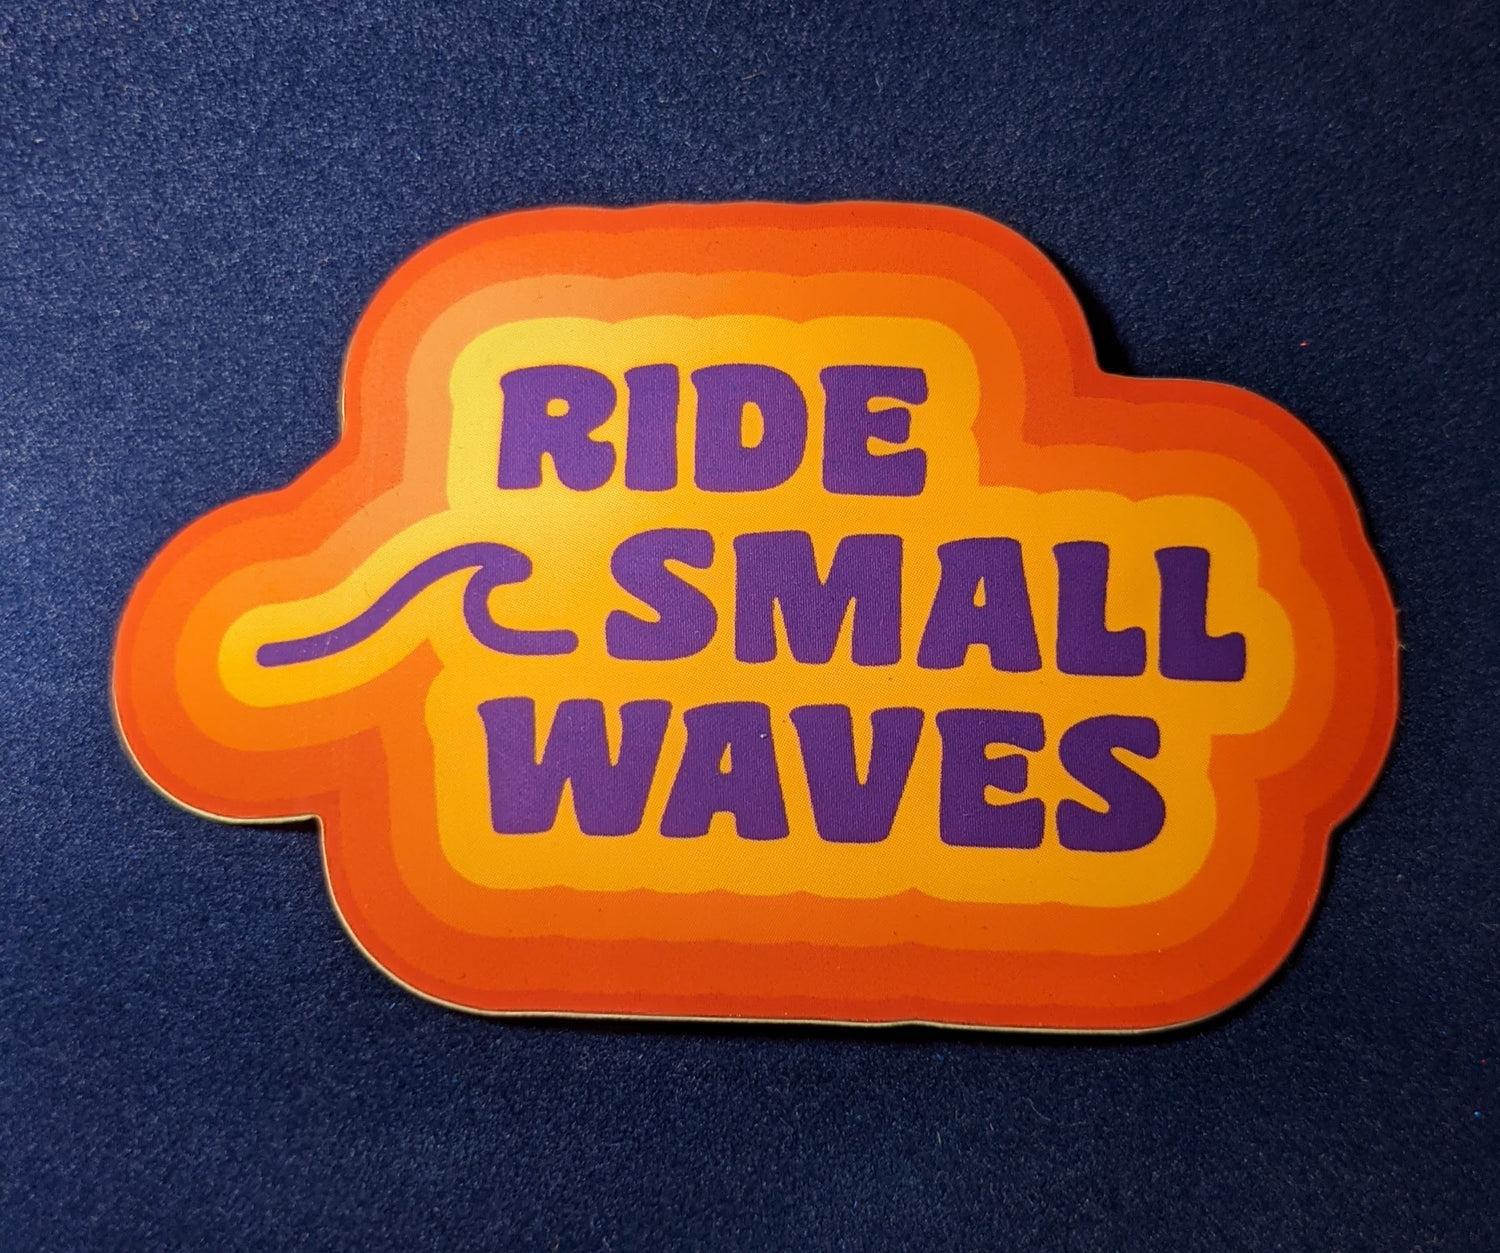 Ride Small Waves retro sticker by Annika Layne